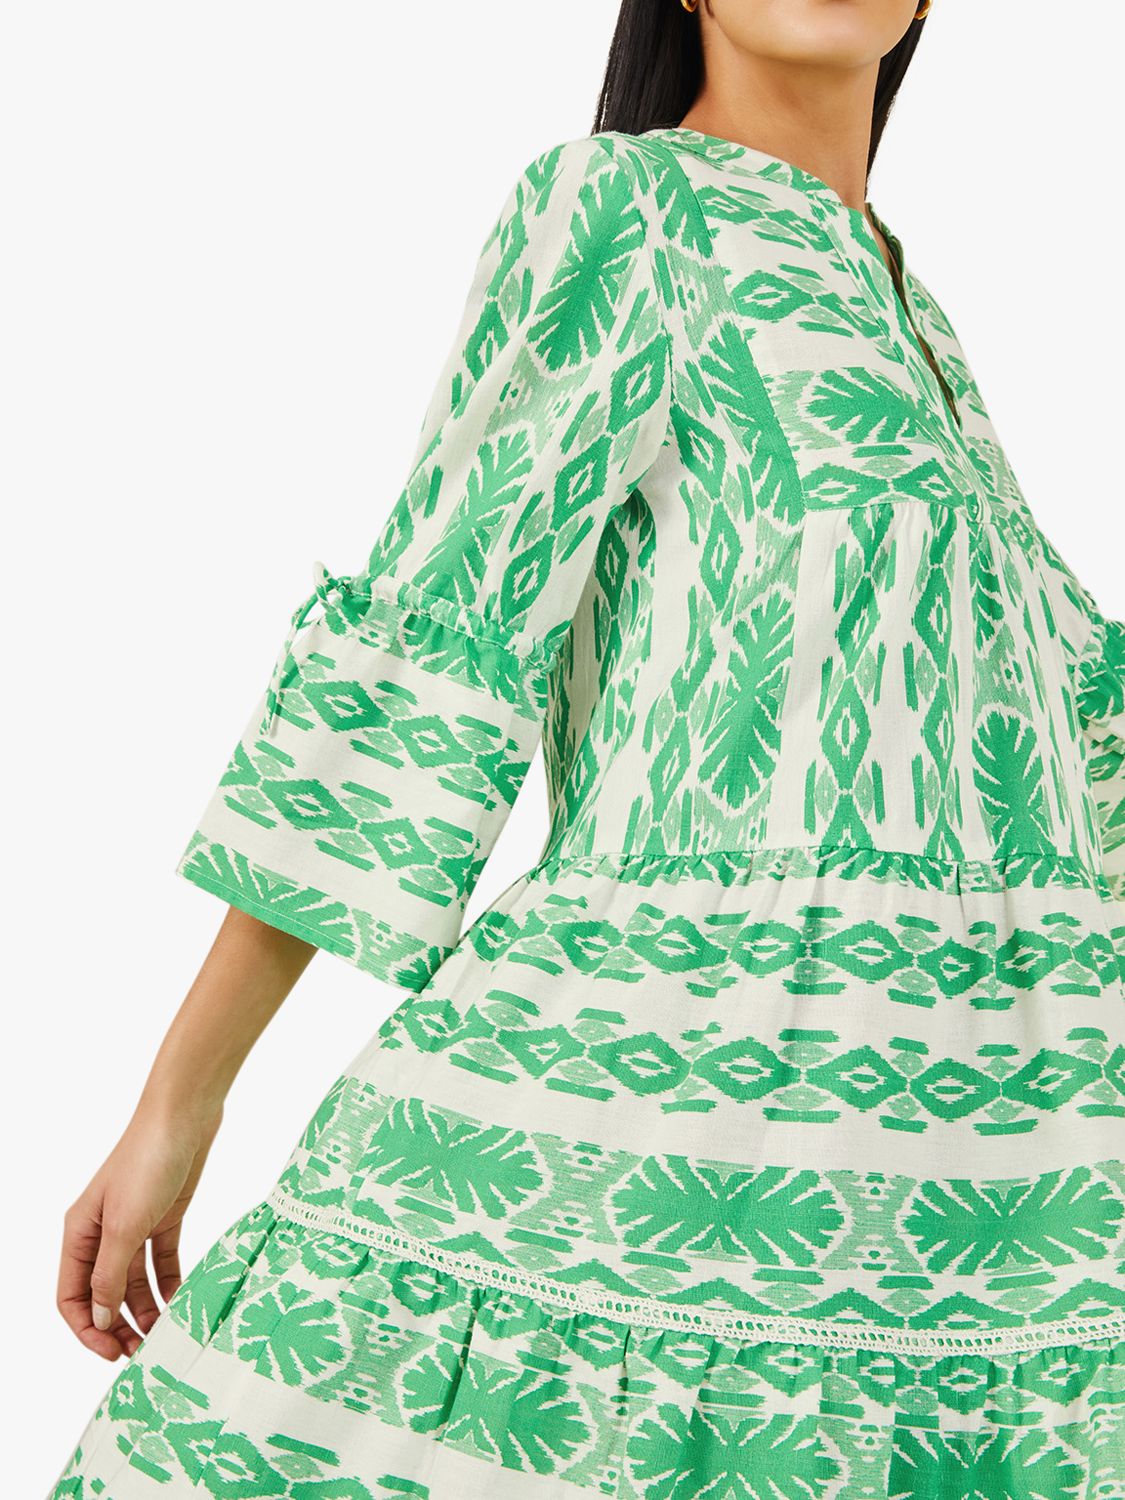 Accessorize Geometric Jacquard Print Knee Length Dress, Mid Green/White, XL